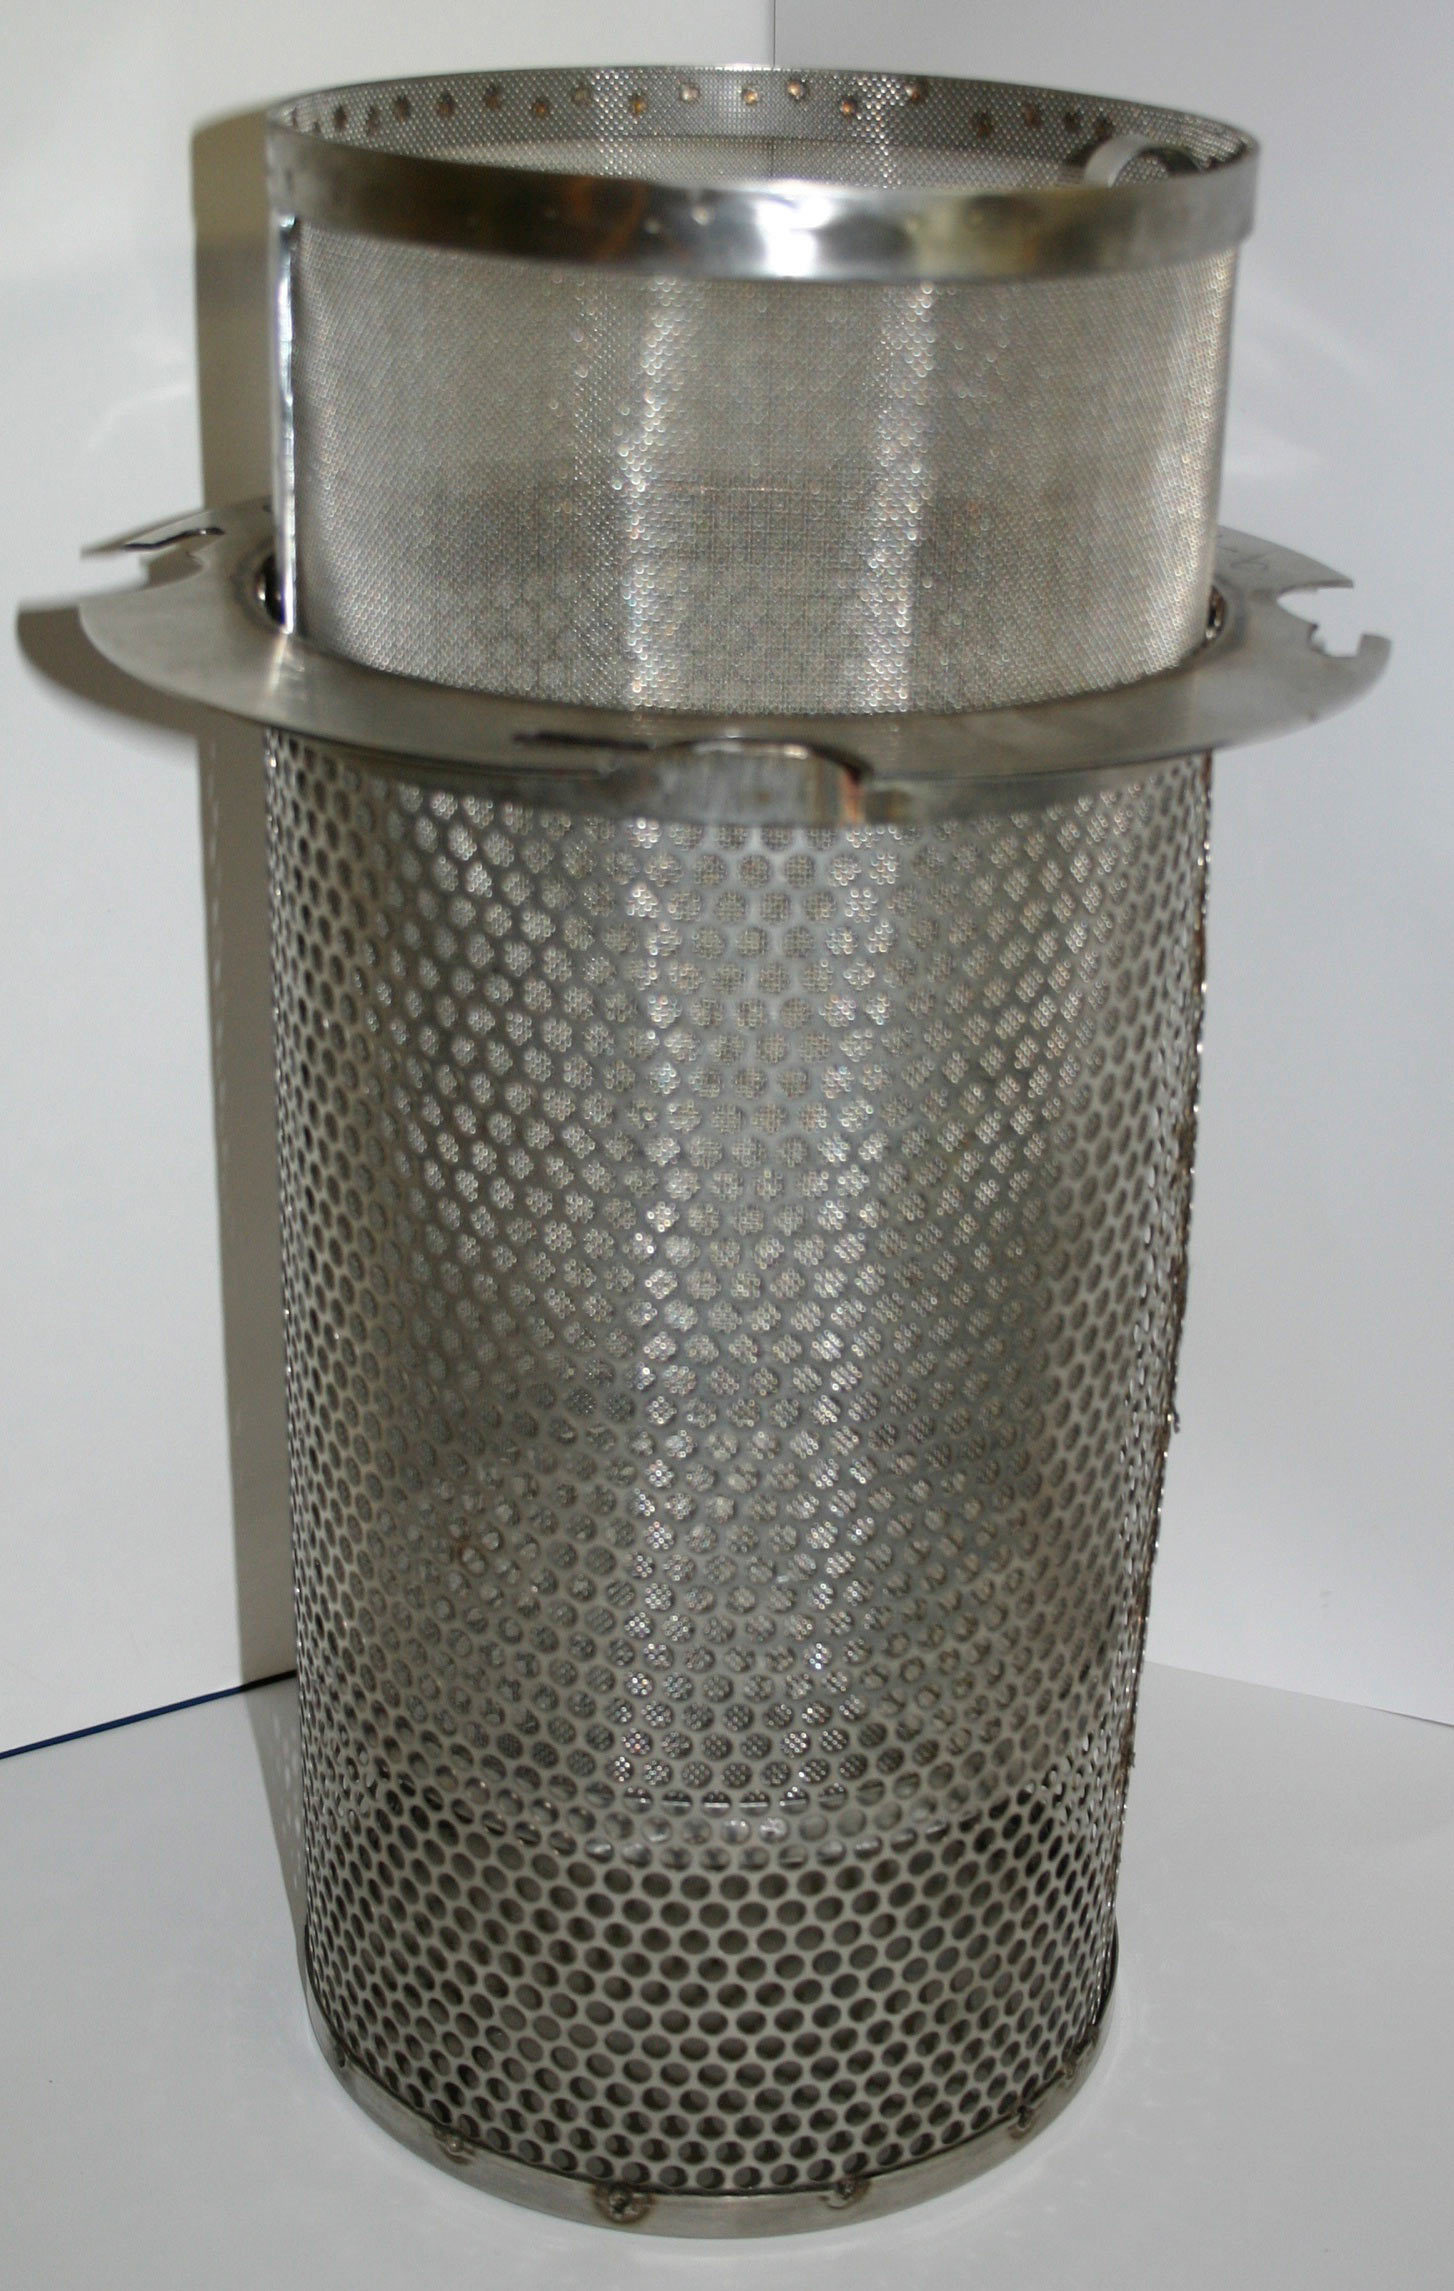 Basket Strainer From Oil Filter